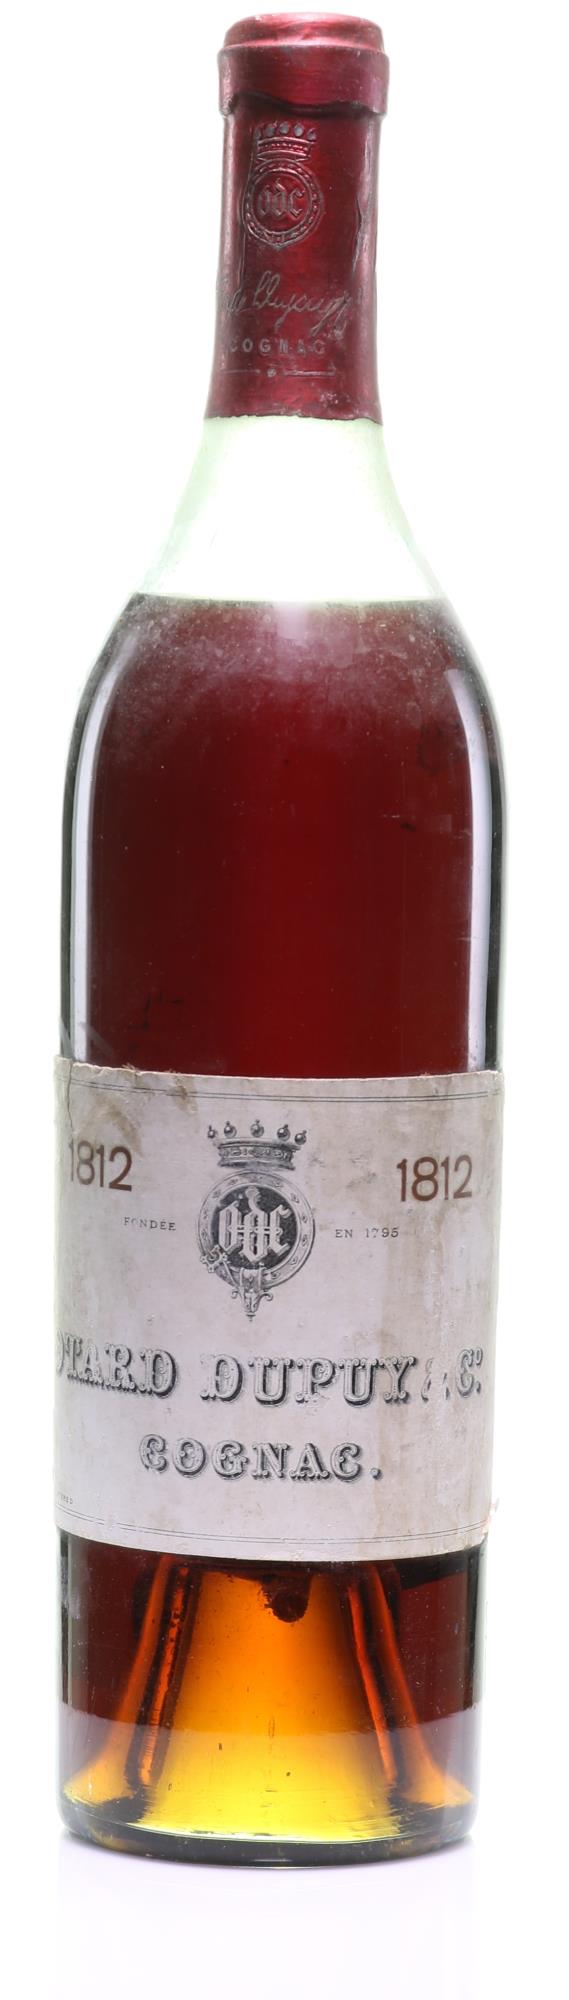 J.R. Phillips & Co, Ltd. Otard Dupuy & Co 1812 Cognac - Rue Pinard